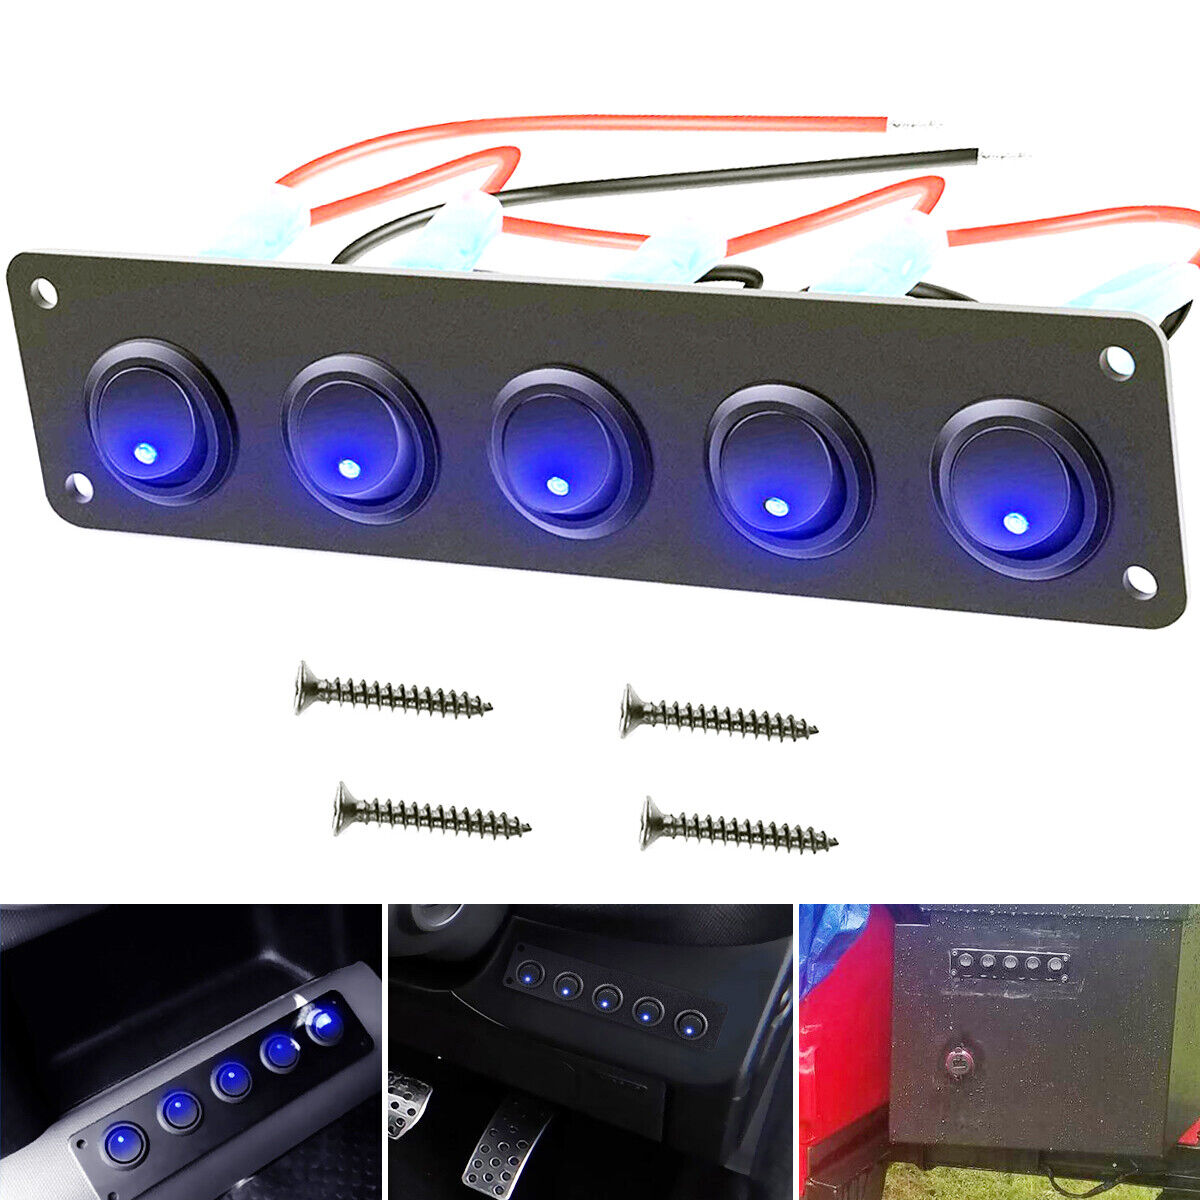 5 Gang Toggle Rocker Switch Panel For Car Boat Marine RV Truck Blue LED 12V